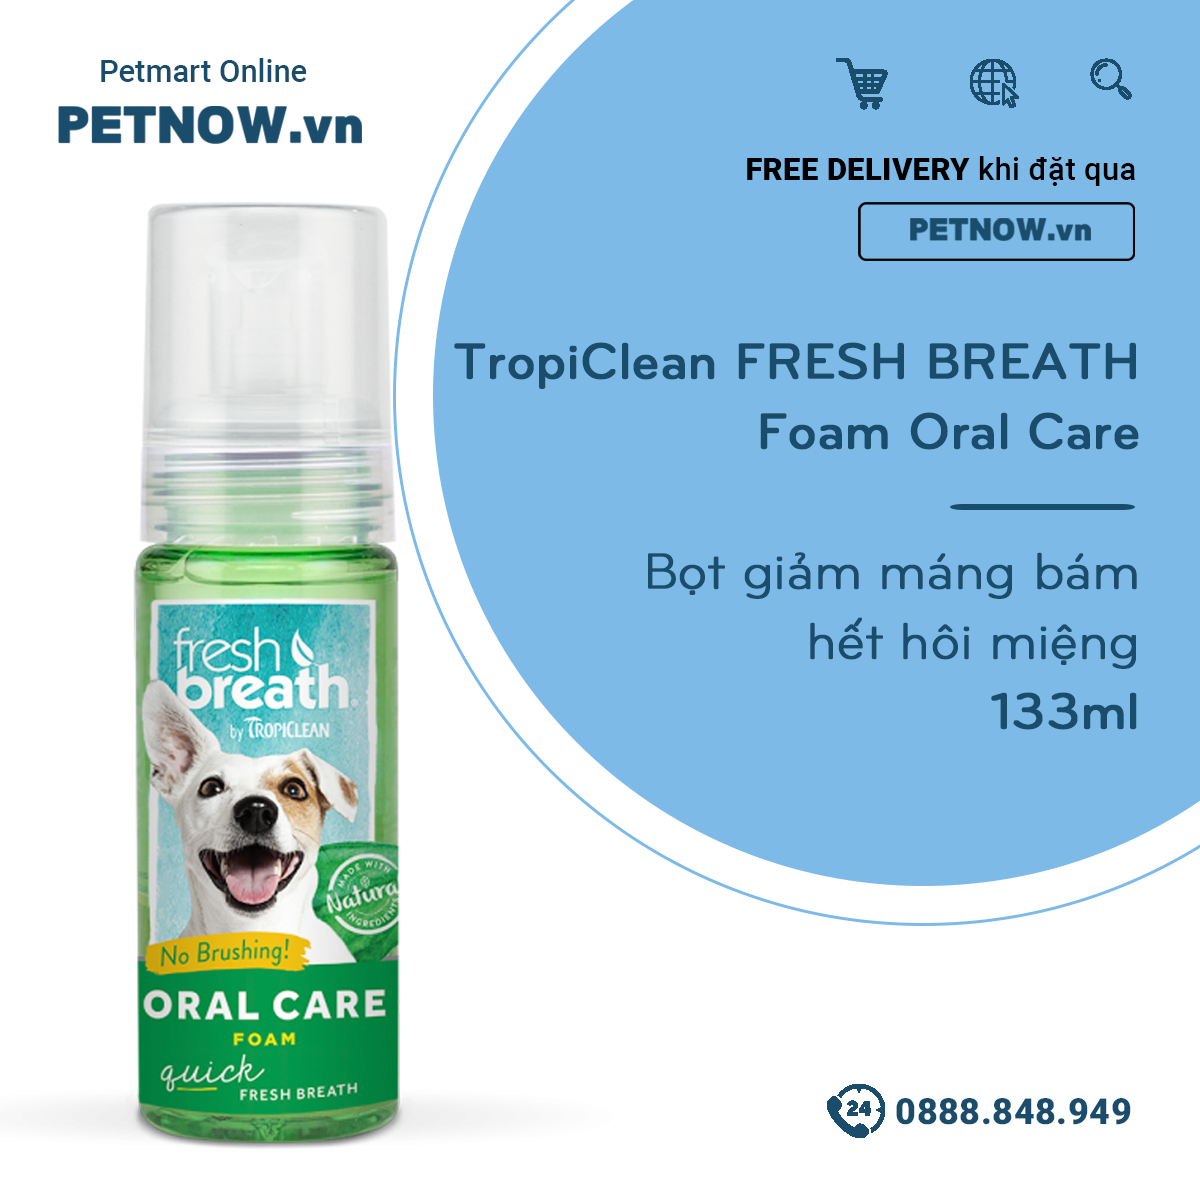 TropiClean FRESH BREATH Foam Oral Care 133ml